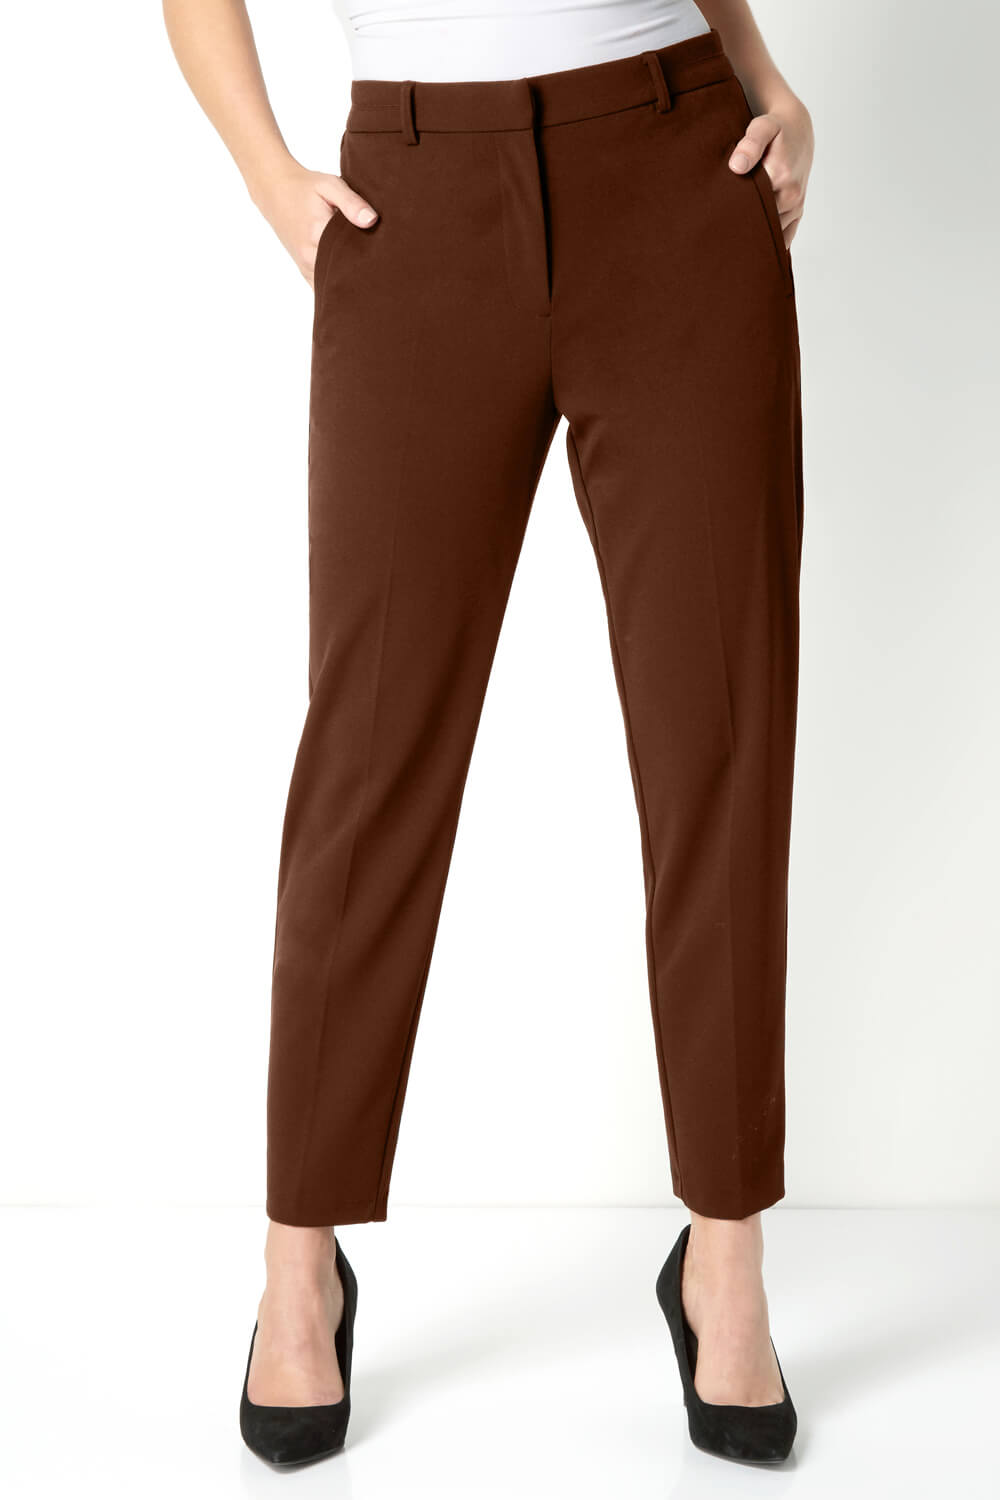 Chocolate Short Straight Leg Stretch Trouser, Image 2 of 3